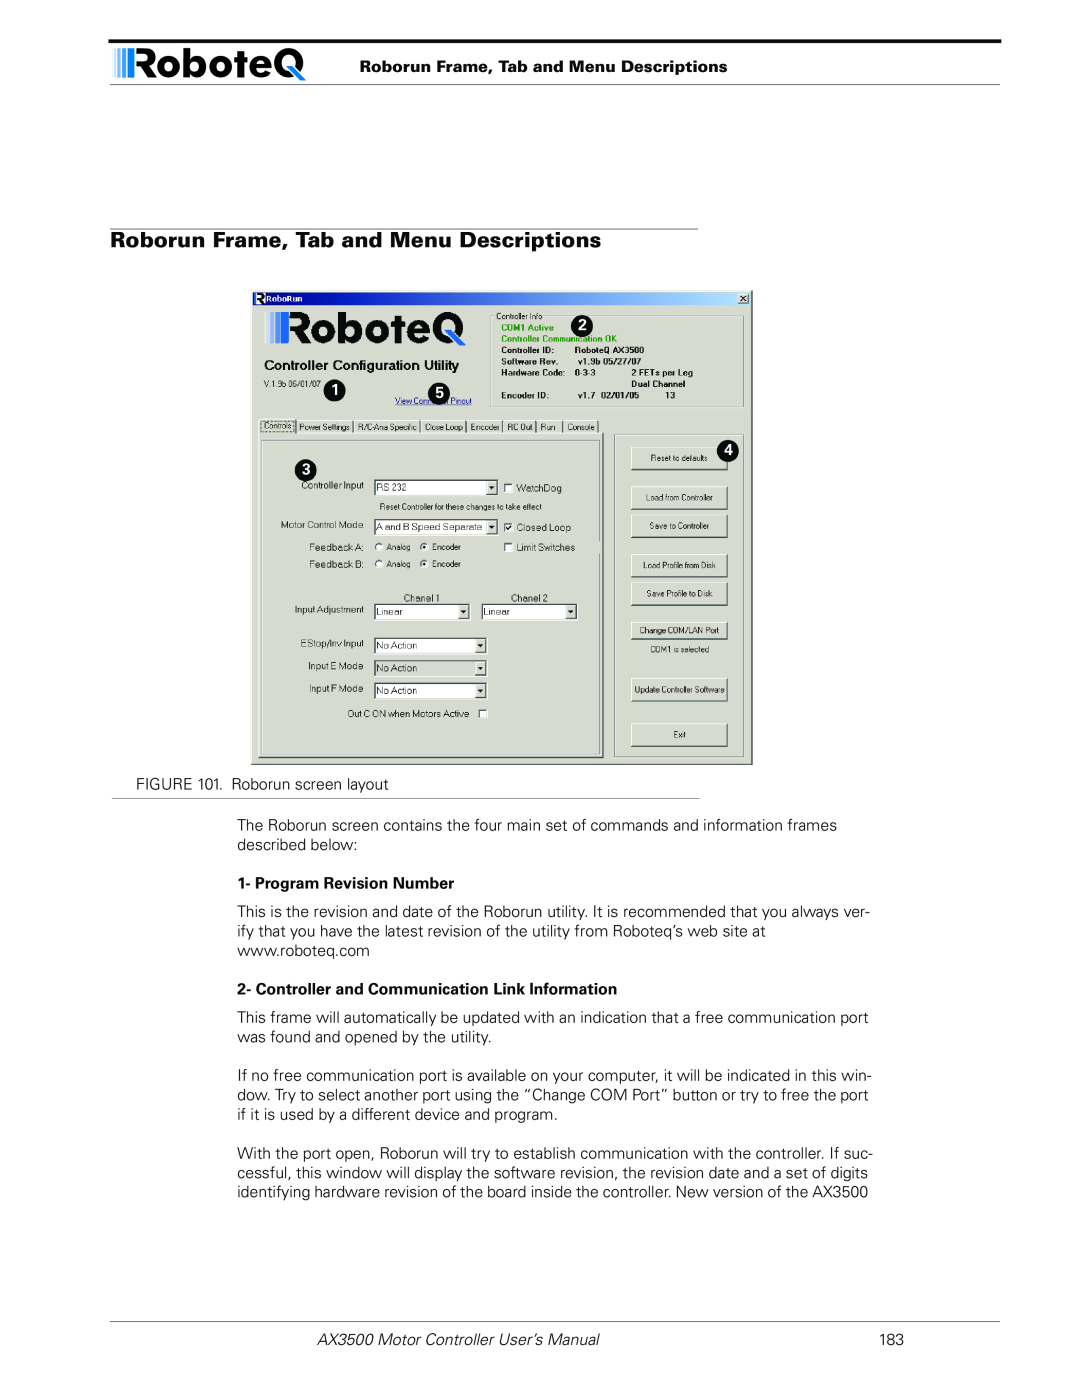 RoboteQ Roborun Frame, Tab and Menu Descriptions, Program Revision Number, AX3500 Motor Controller User’s Manual 